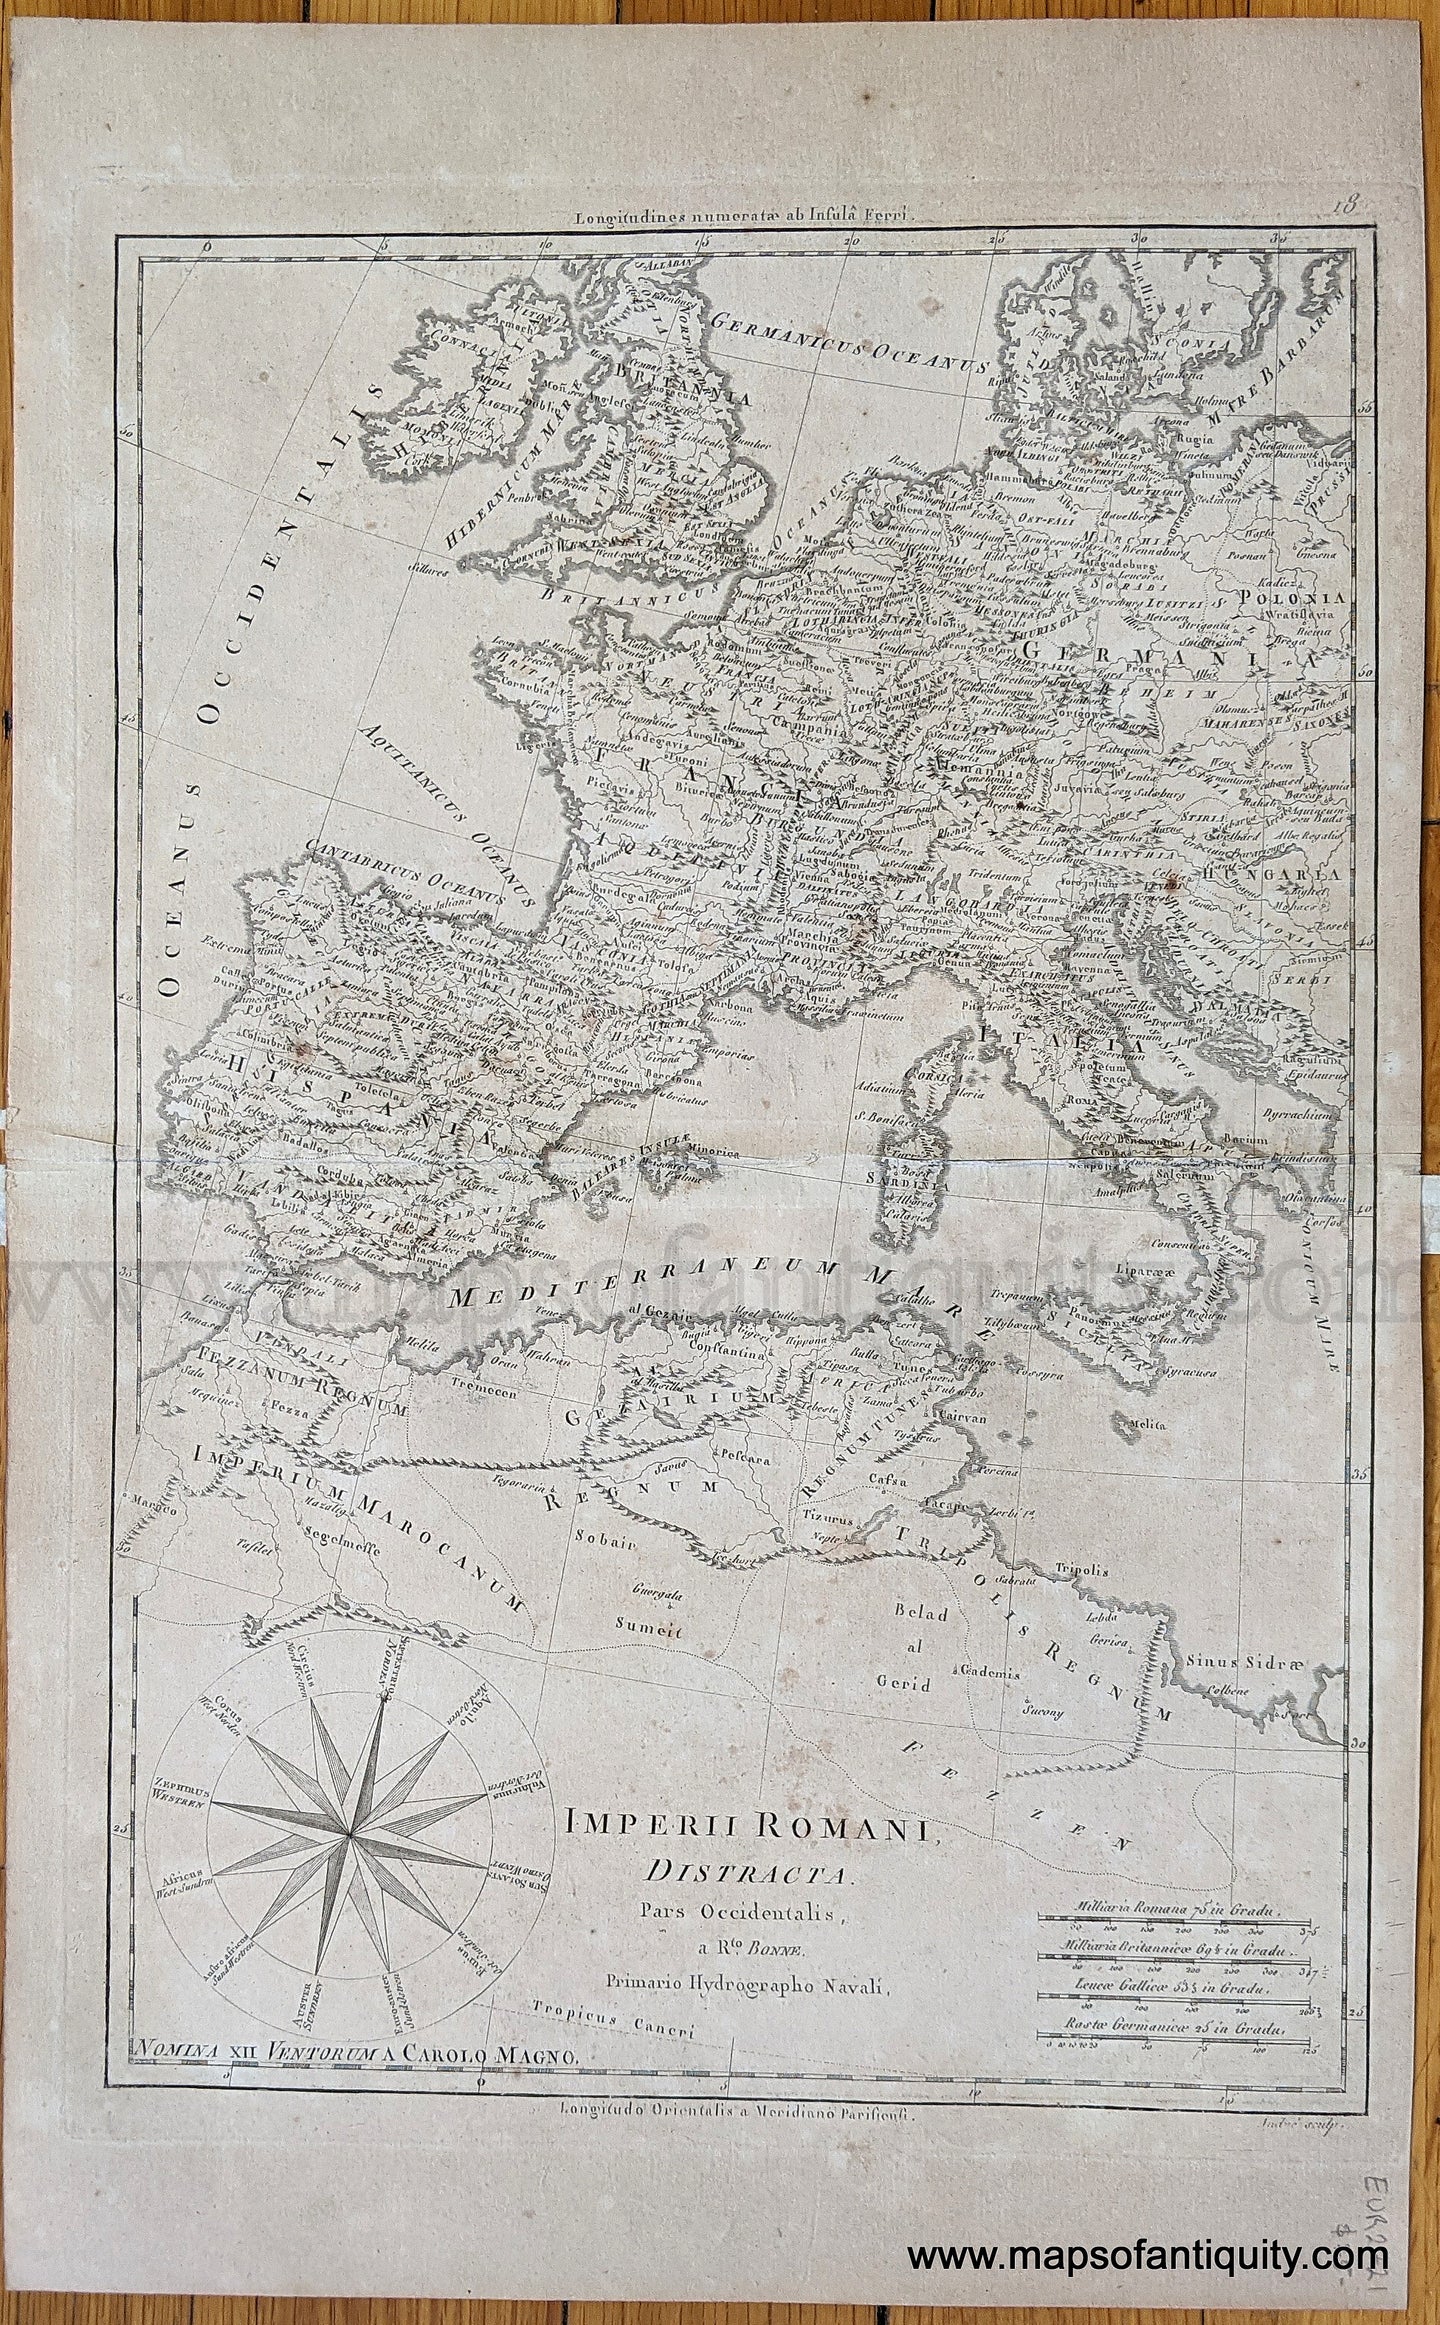 Genuine-Antique-Map-Imperii-Romani-Distracta-Europe--1787-Bonne-and-Desmarest-Maps-Of-Antiquity-1800s-19th-century